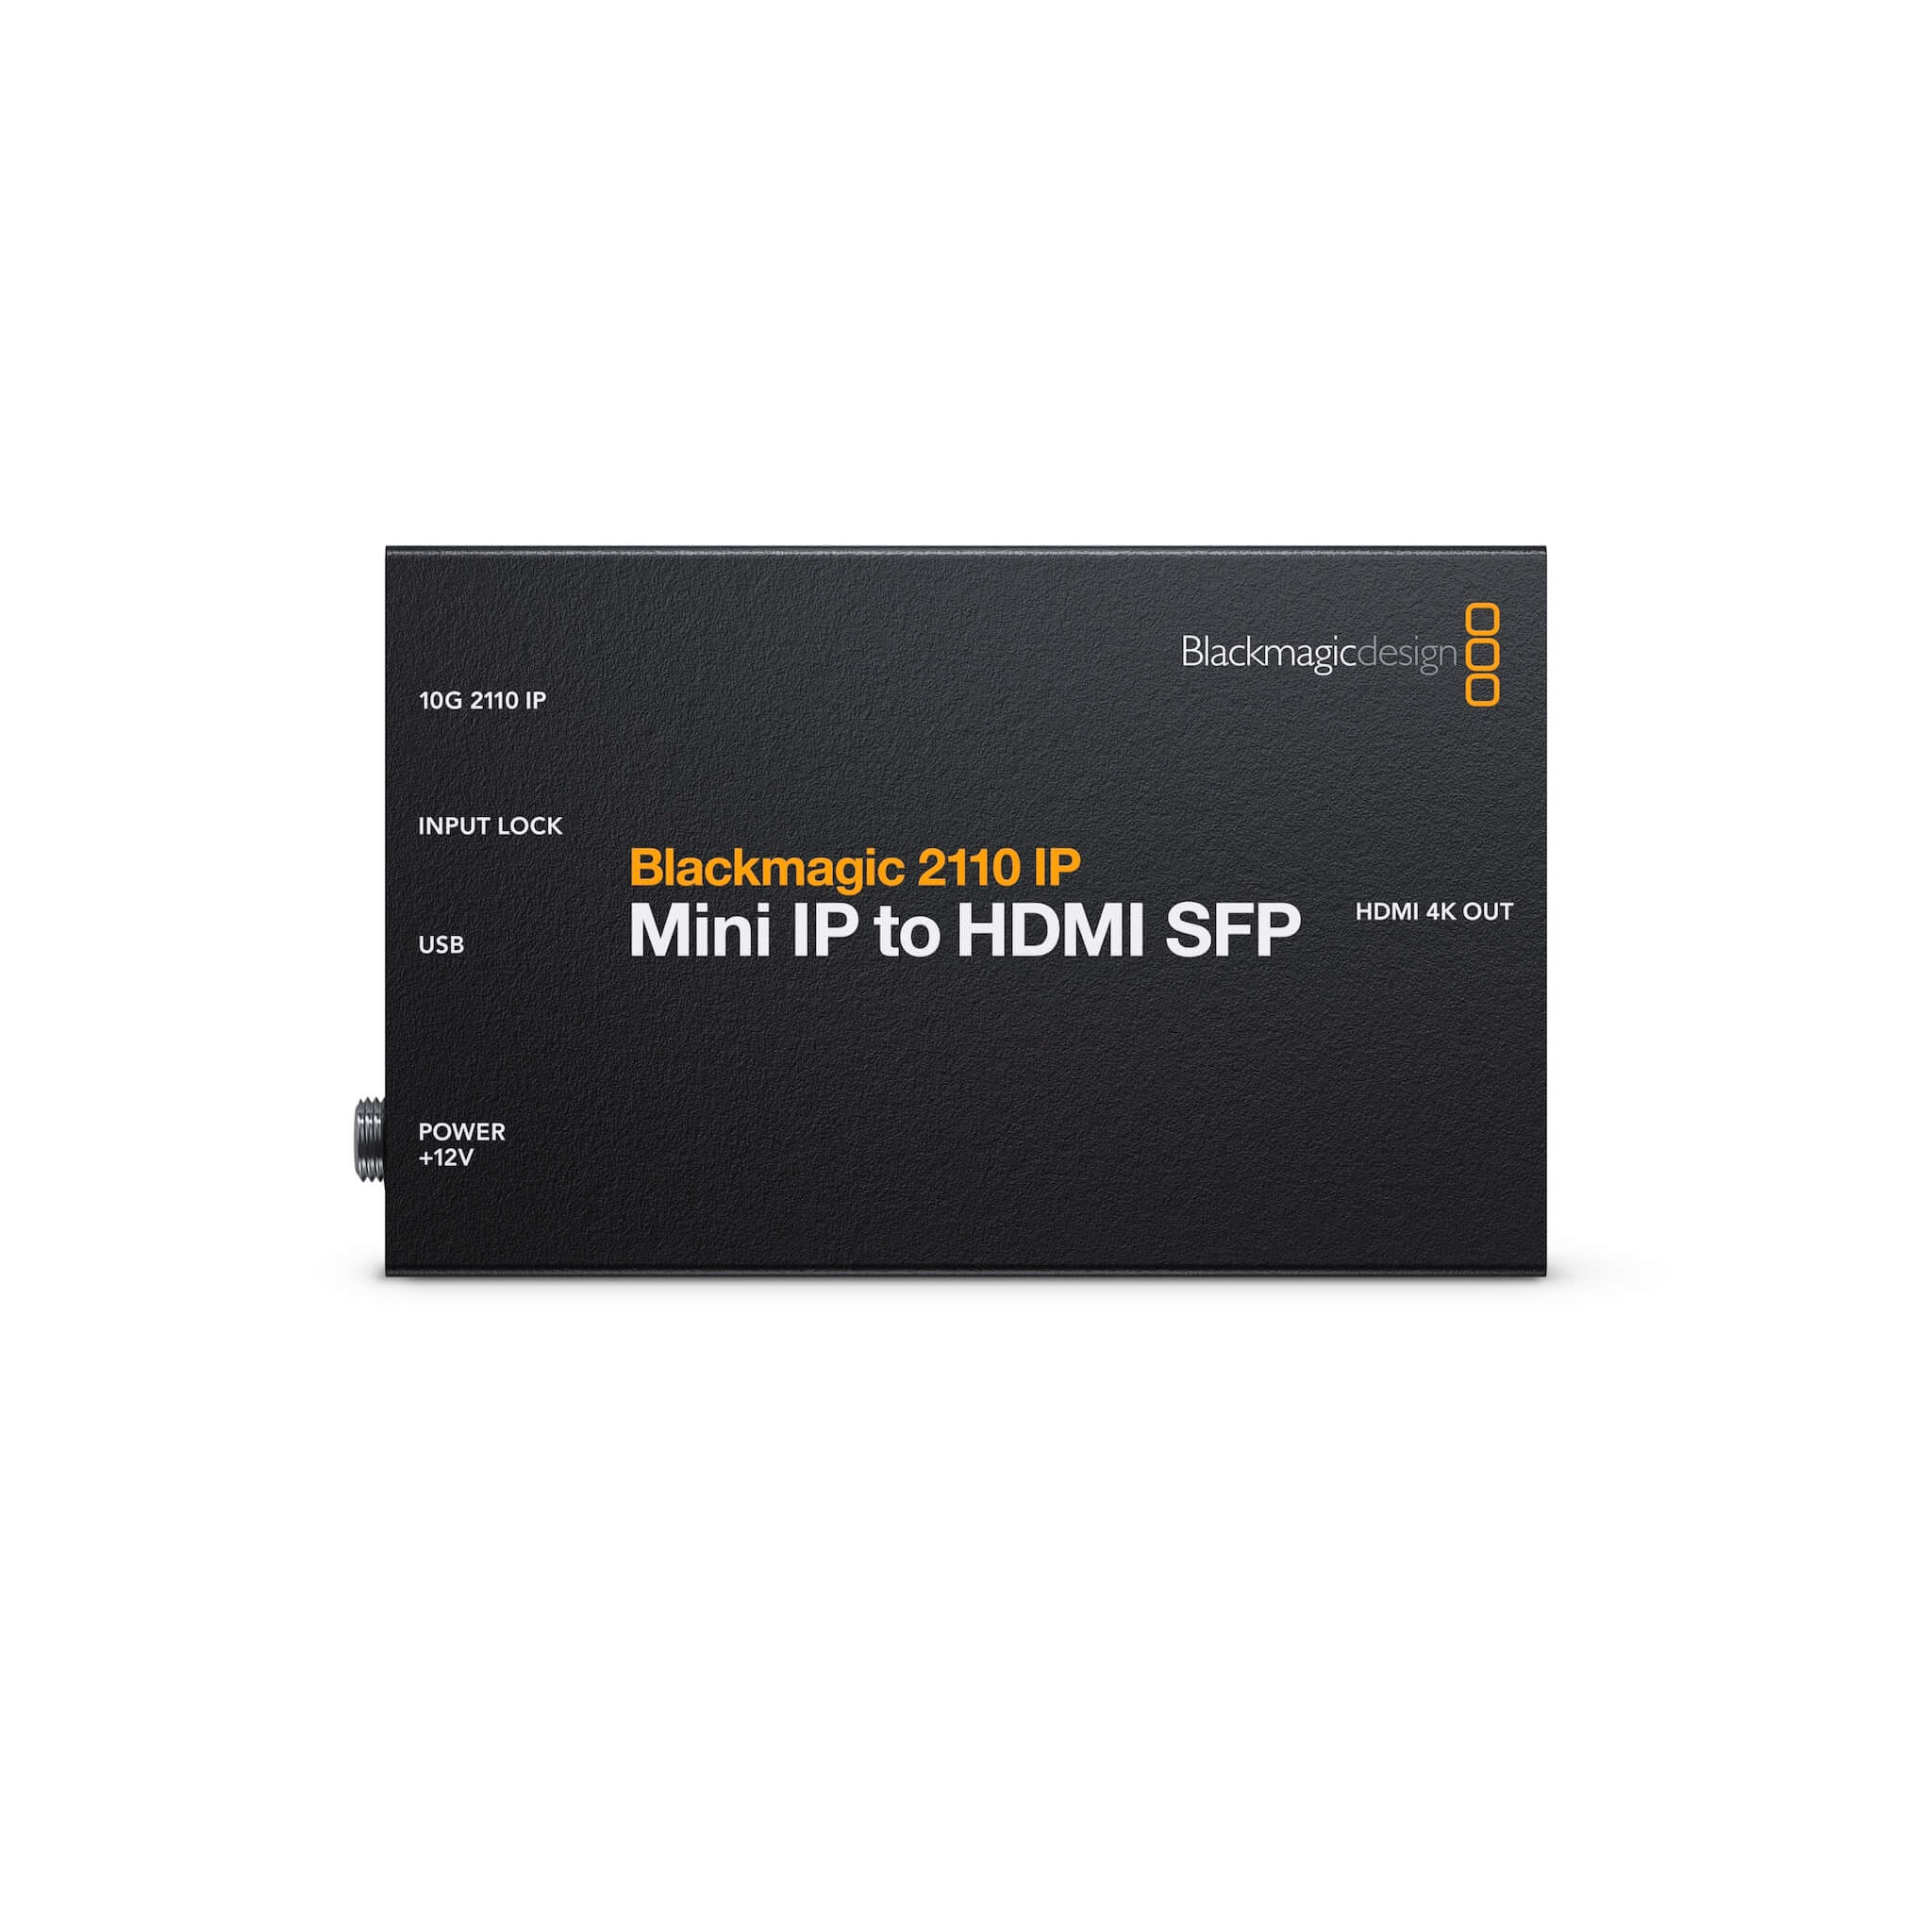 Blackmagic Design 2110 IP Mini IP to HDMI SFP, top